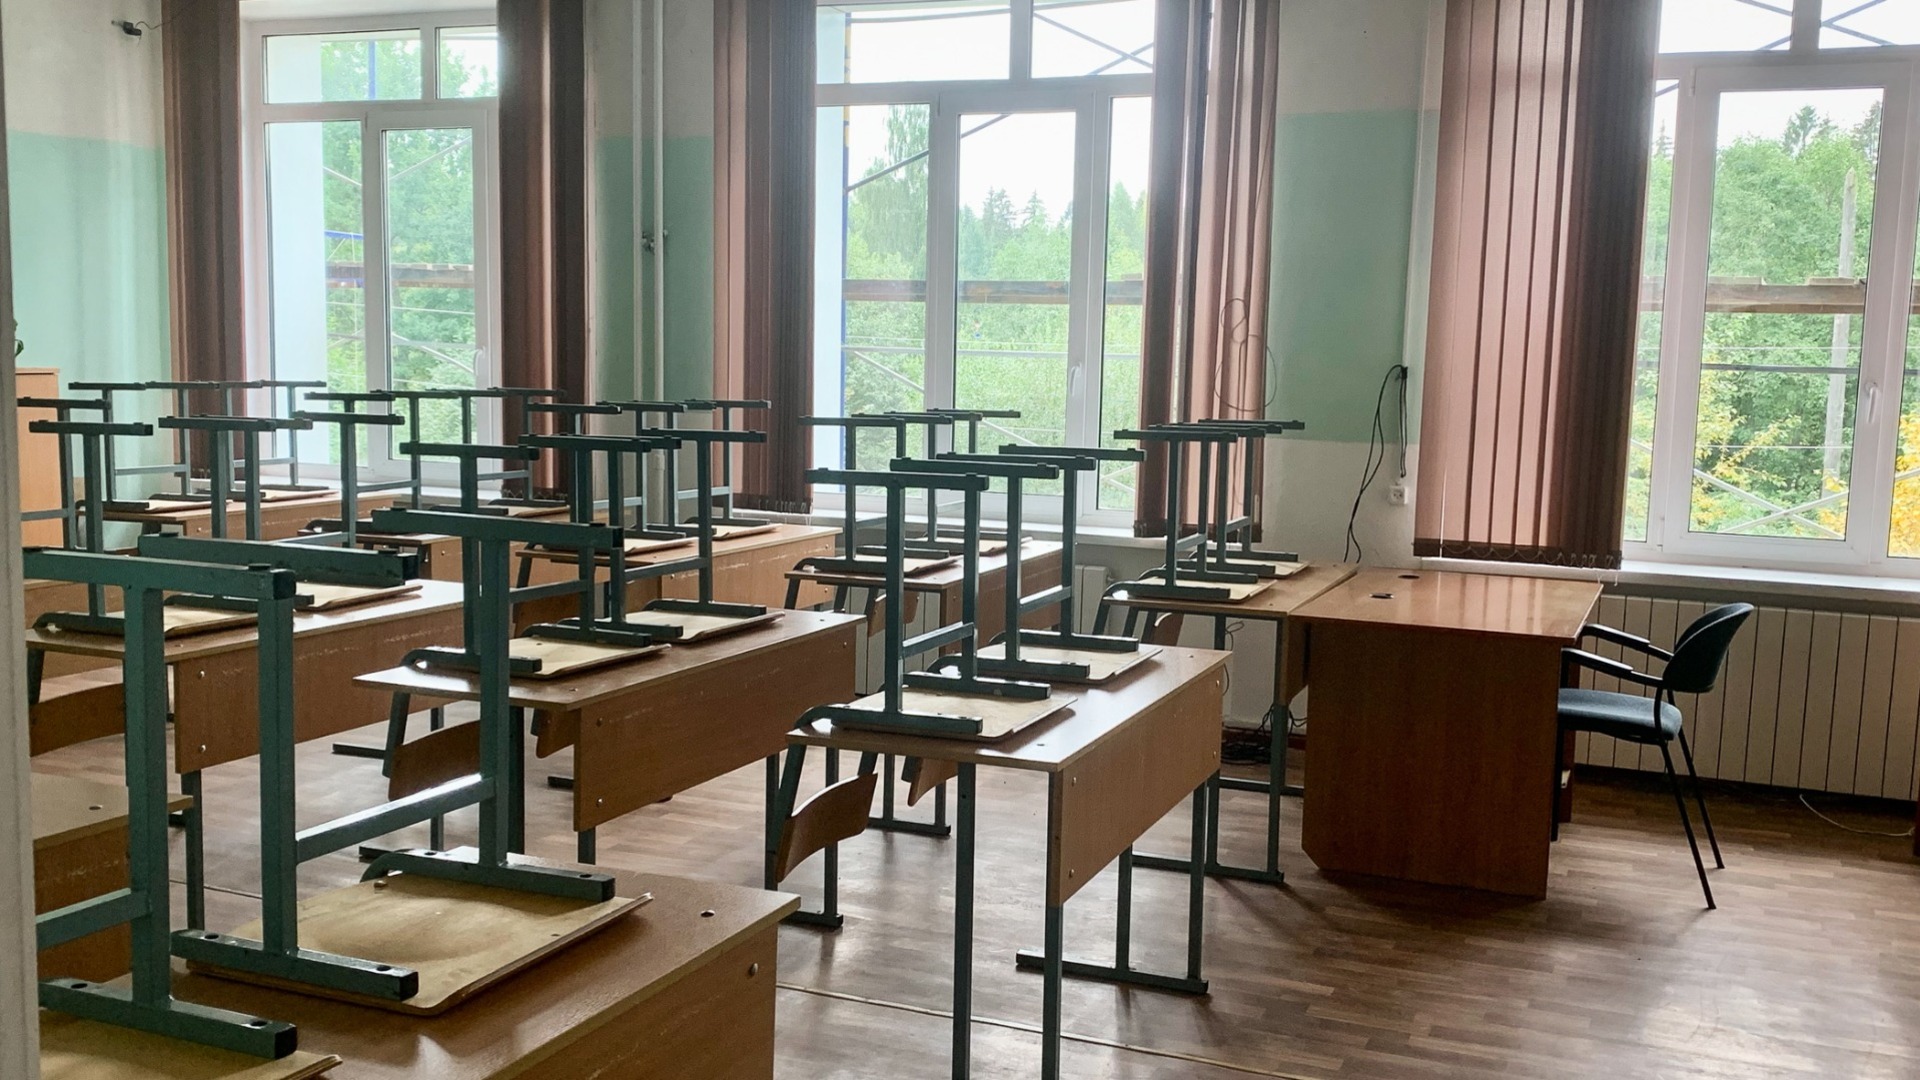 Школьник из Оренбурга удивил комиссию